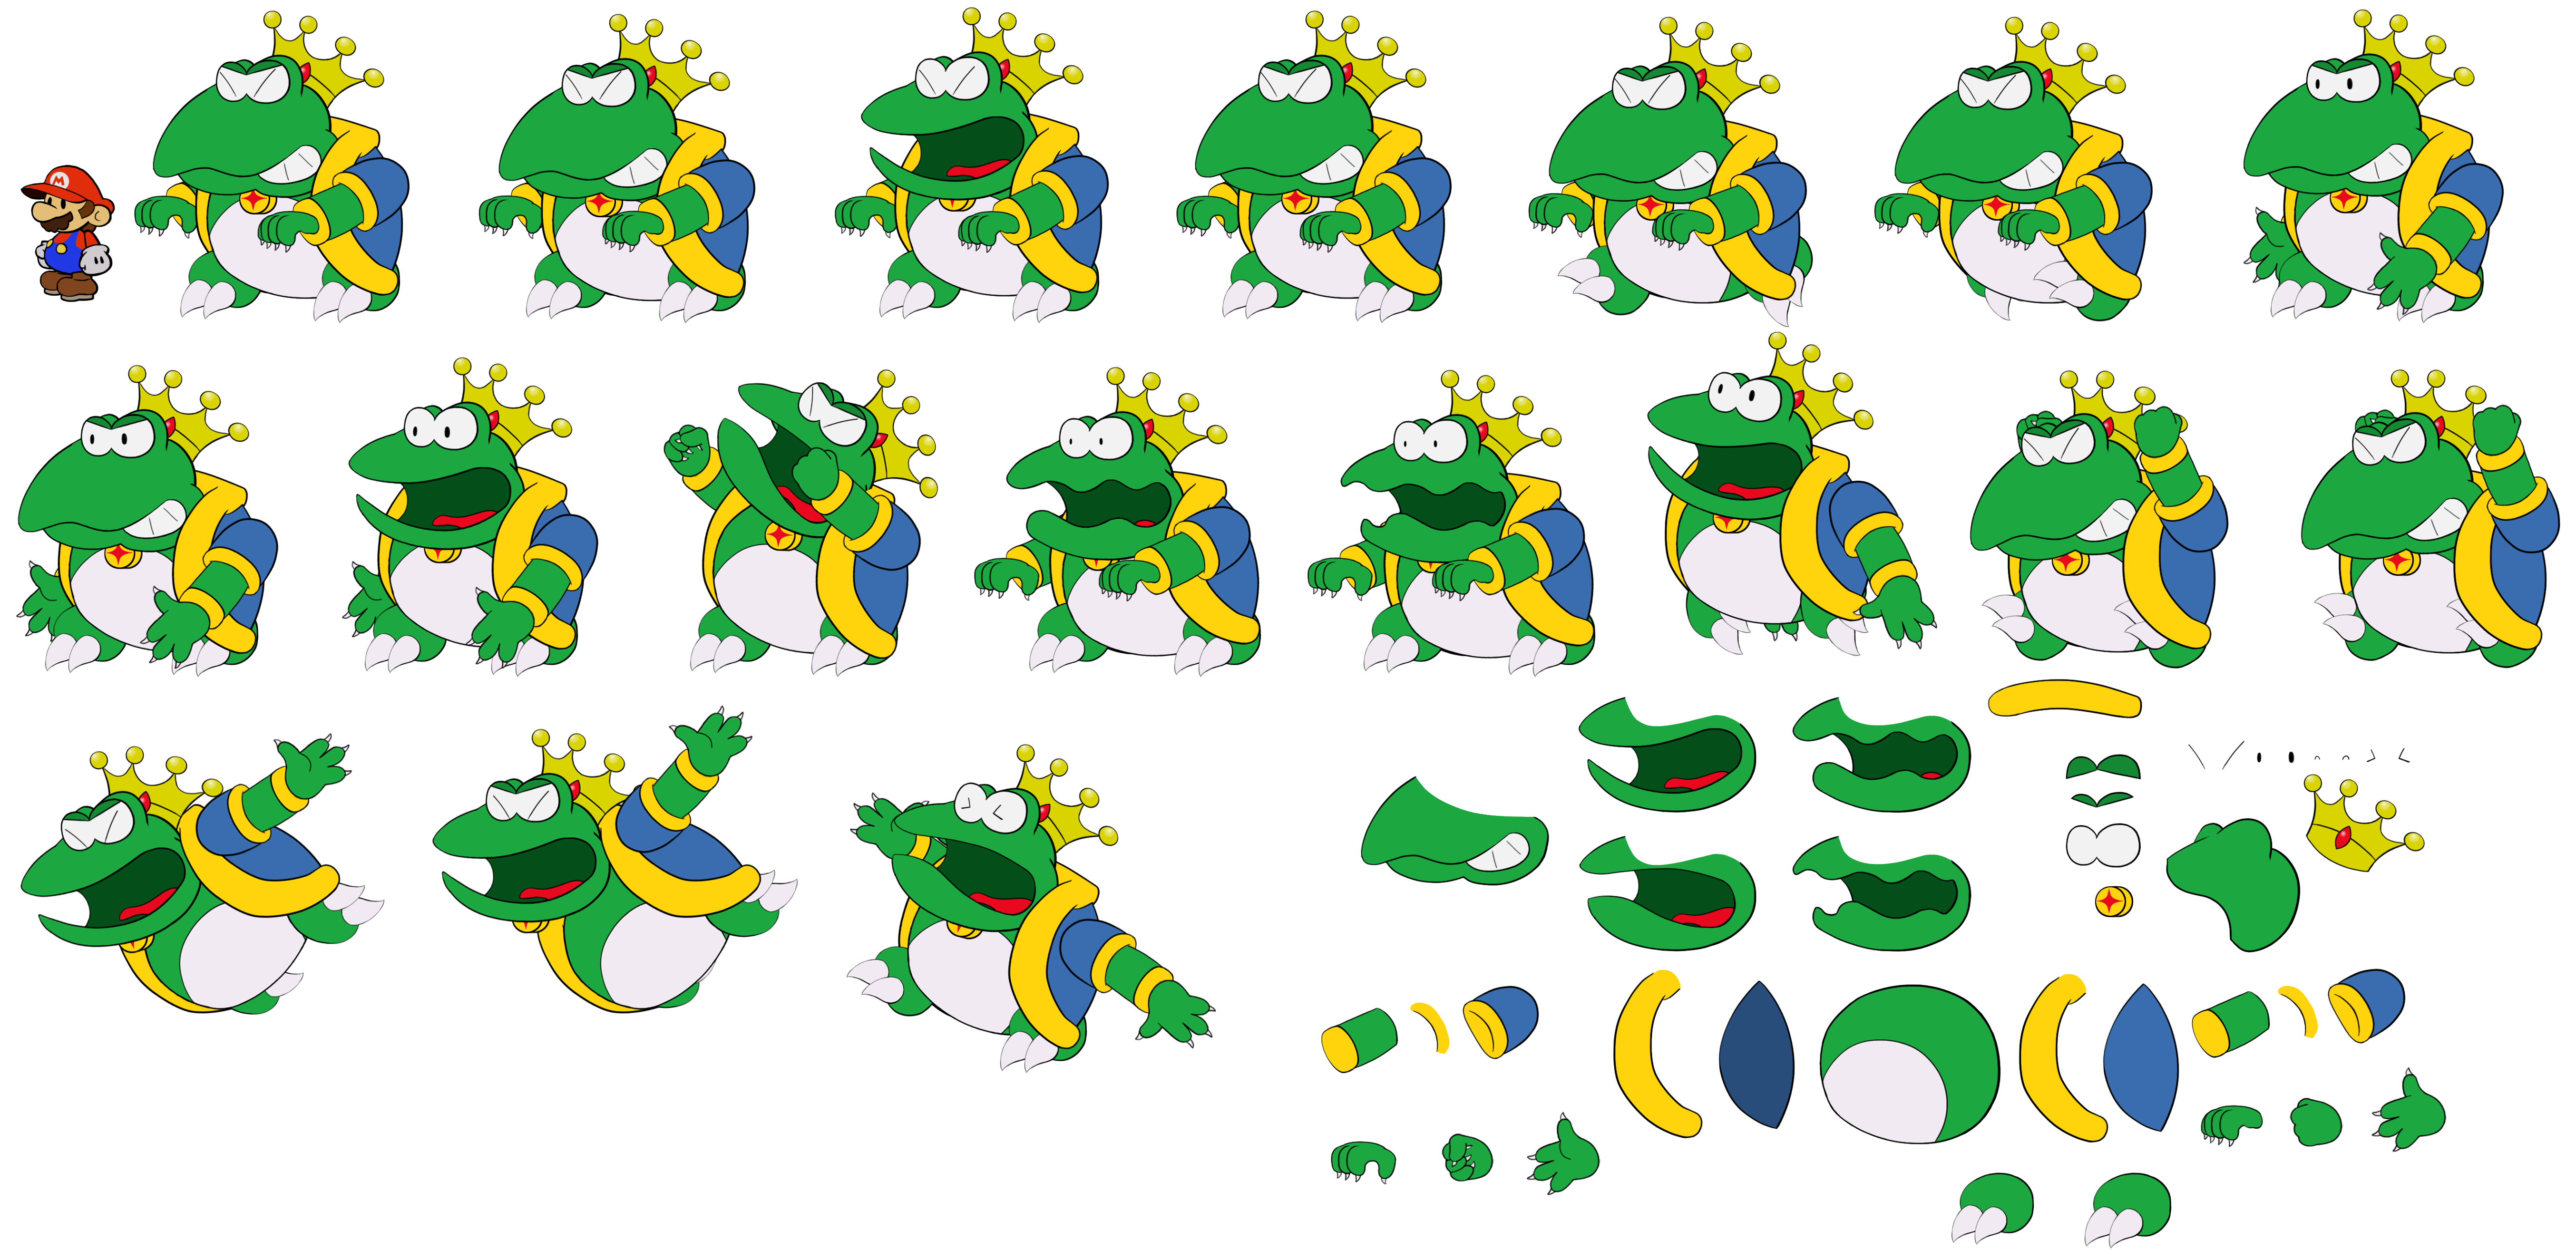 Mario Customs - Wart (Paper Mario-Style)